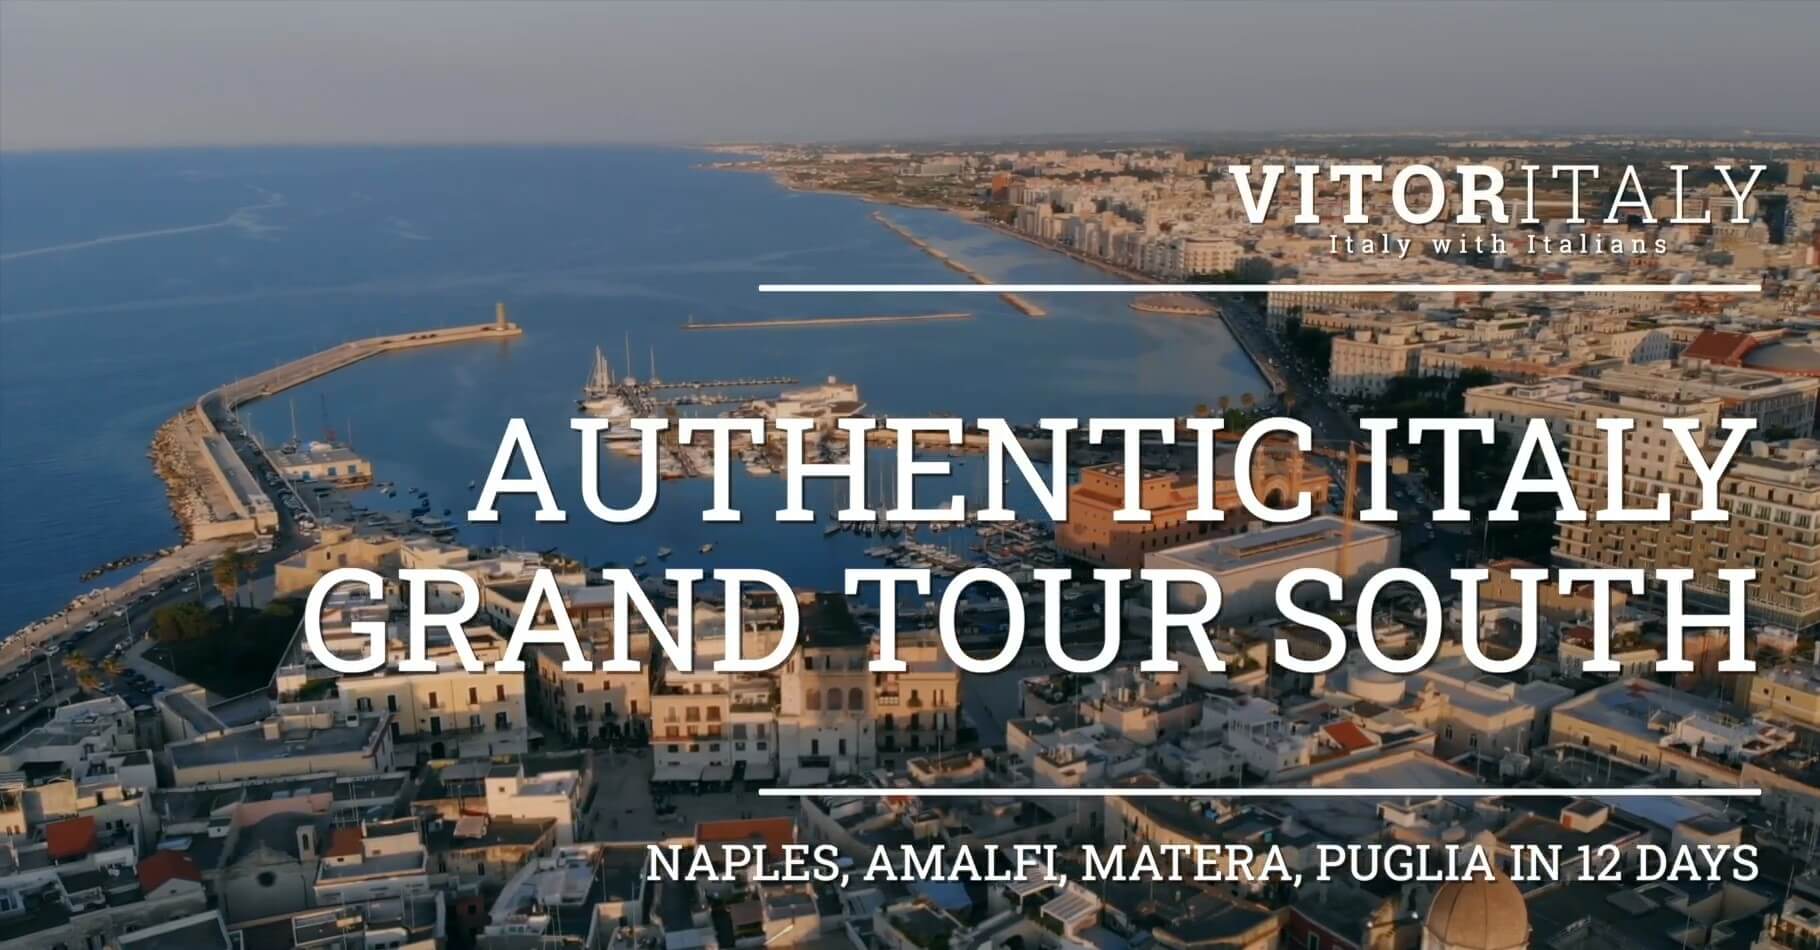 AUTHENTIC ITALY PRIVATE LUXURY TOUR SOUTH - Naples, Amalfi, Matera and Puglia